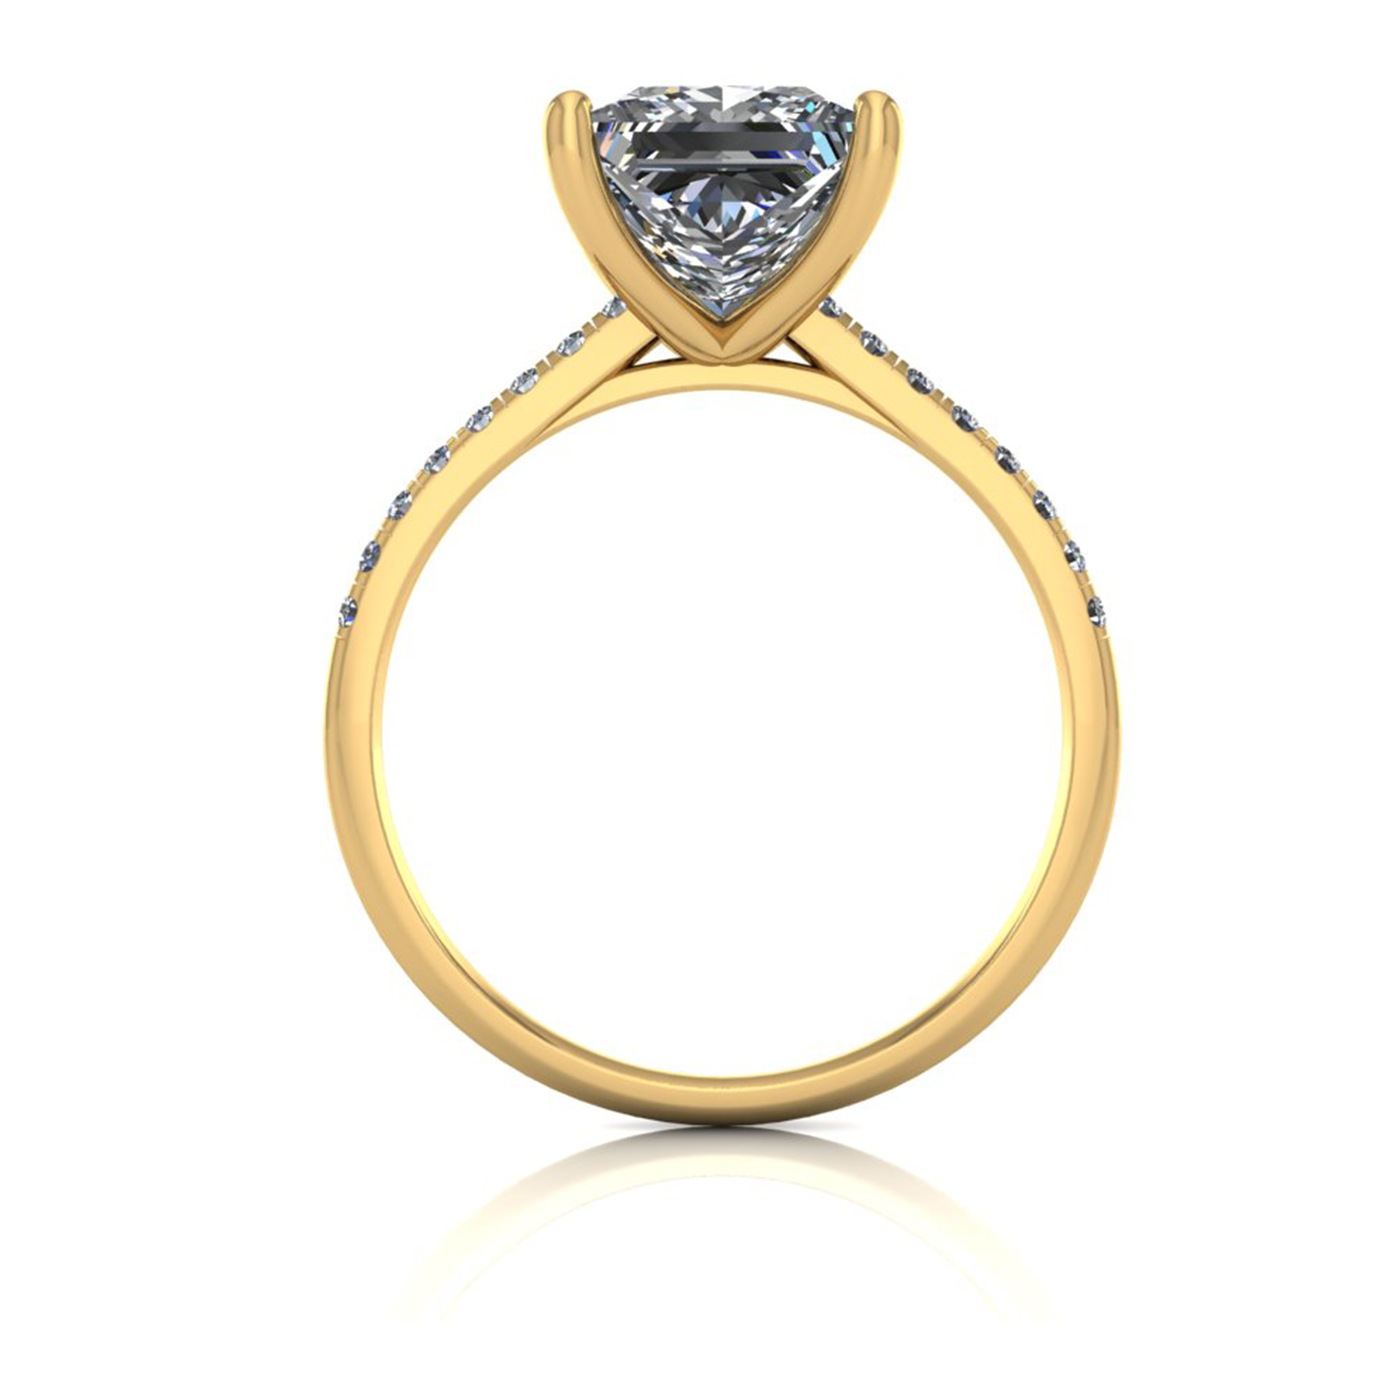 18k yellow gold 2,50 ct 4 prongs princess cut diamond engagement ring with whisper thin pavÉ set band